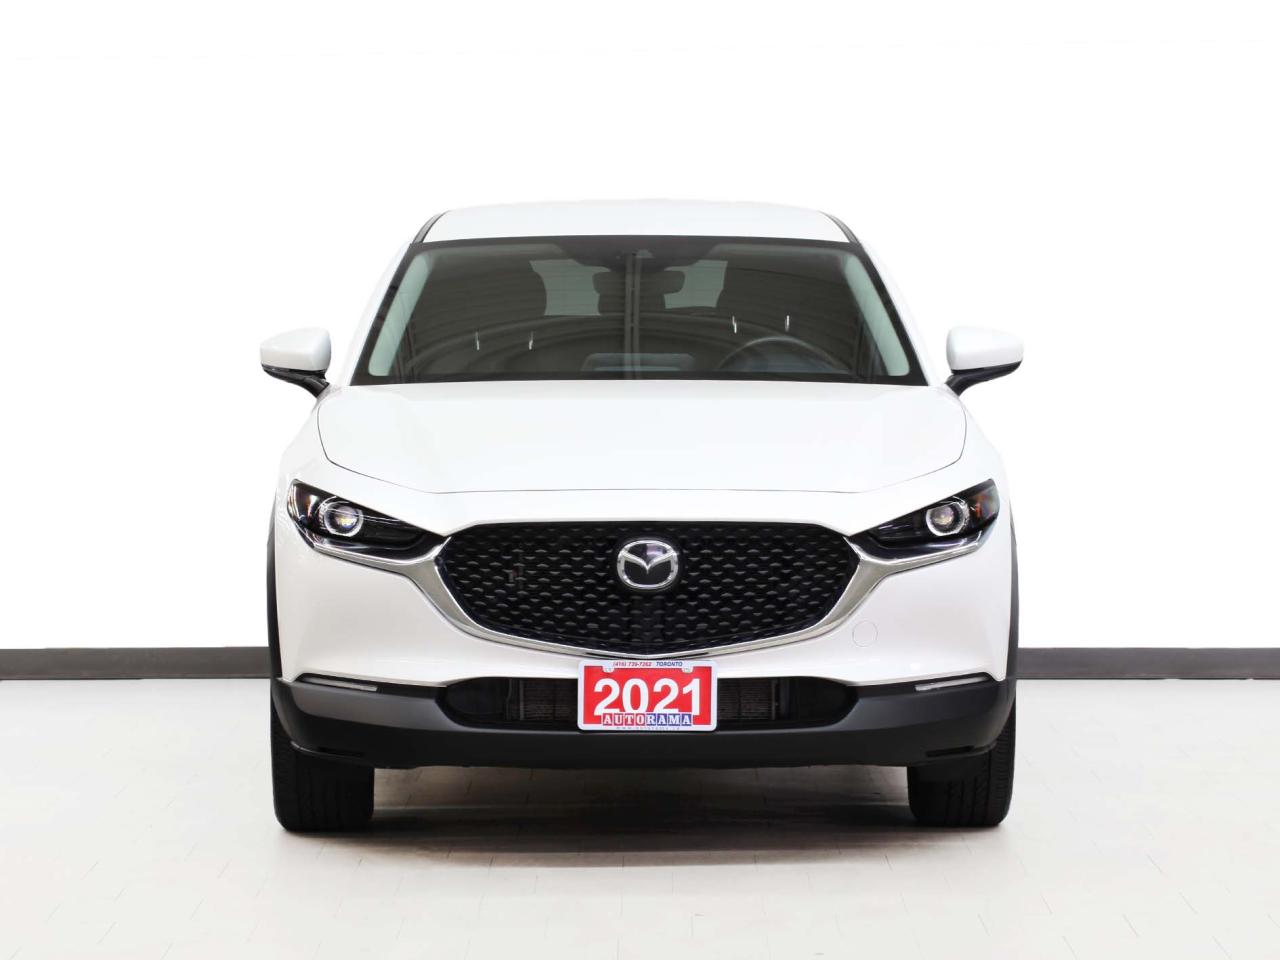 2021 Mazda CX-30 GS | AWD | BSM | ACC | Heated Steering | CarPlay